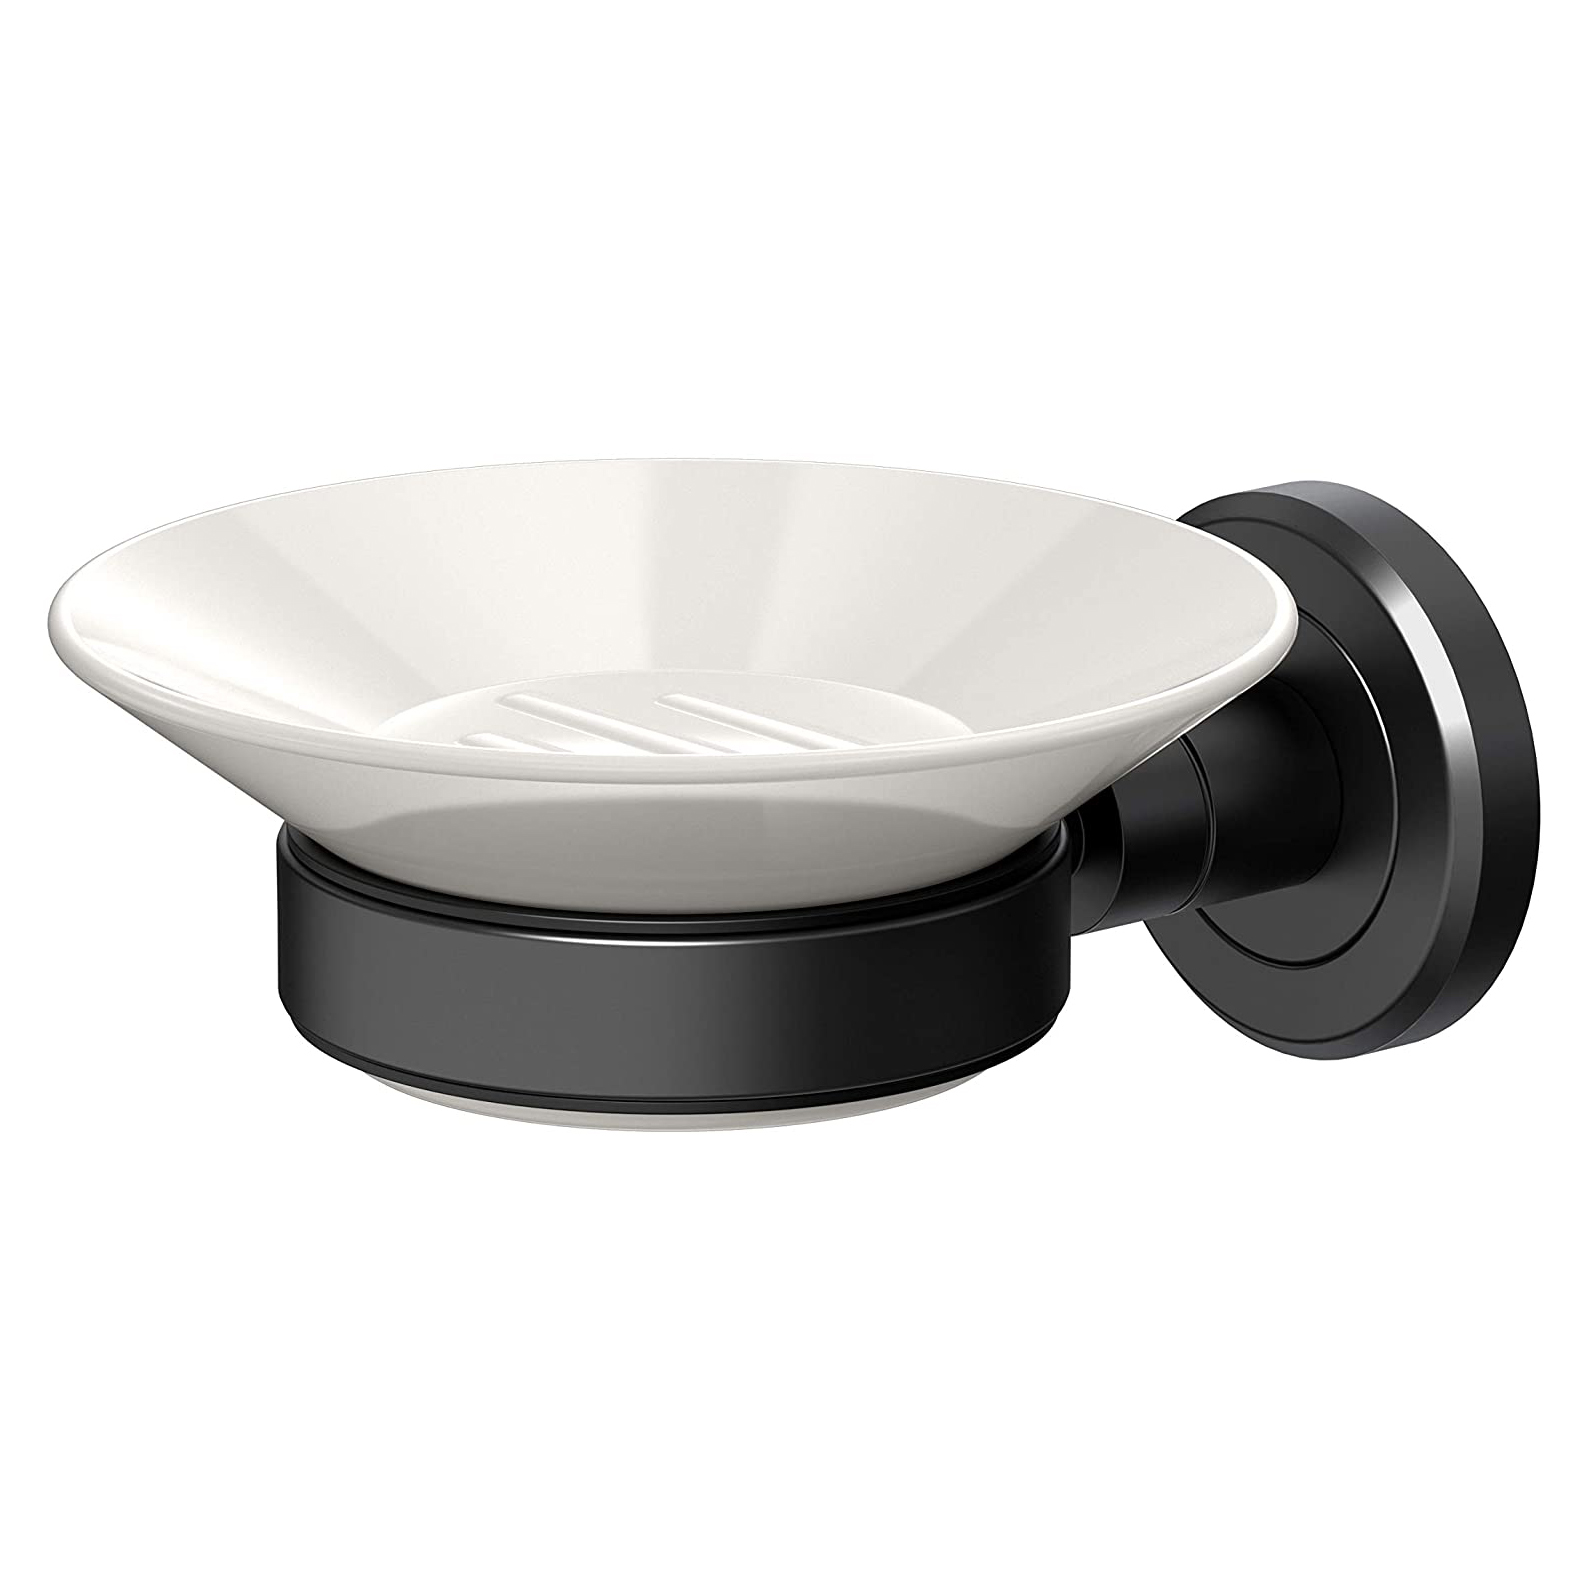 Latitude2 Soap Dish Holder in Matte Black